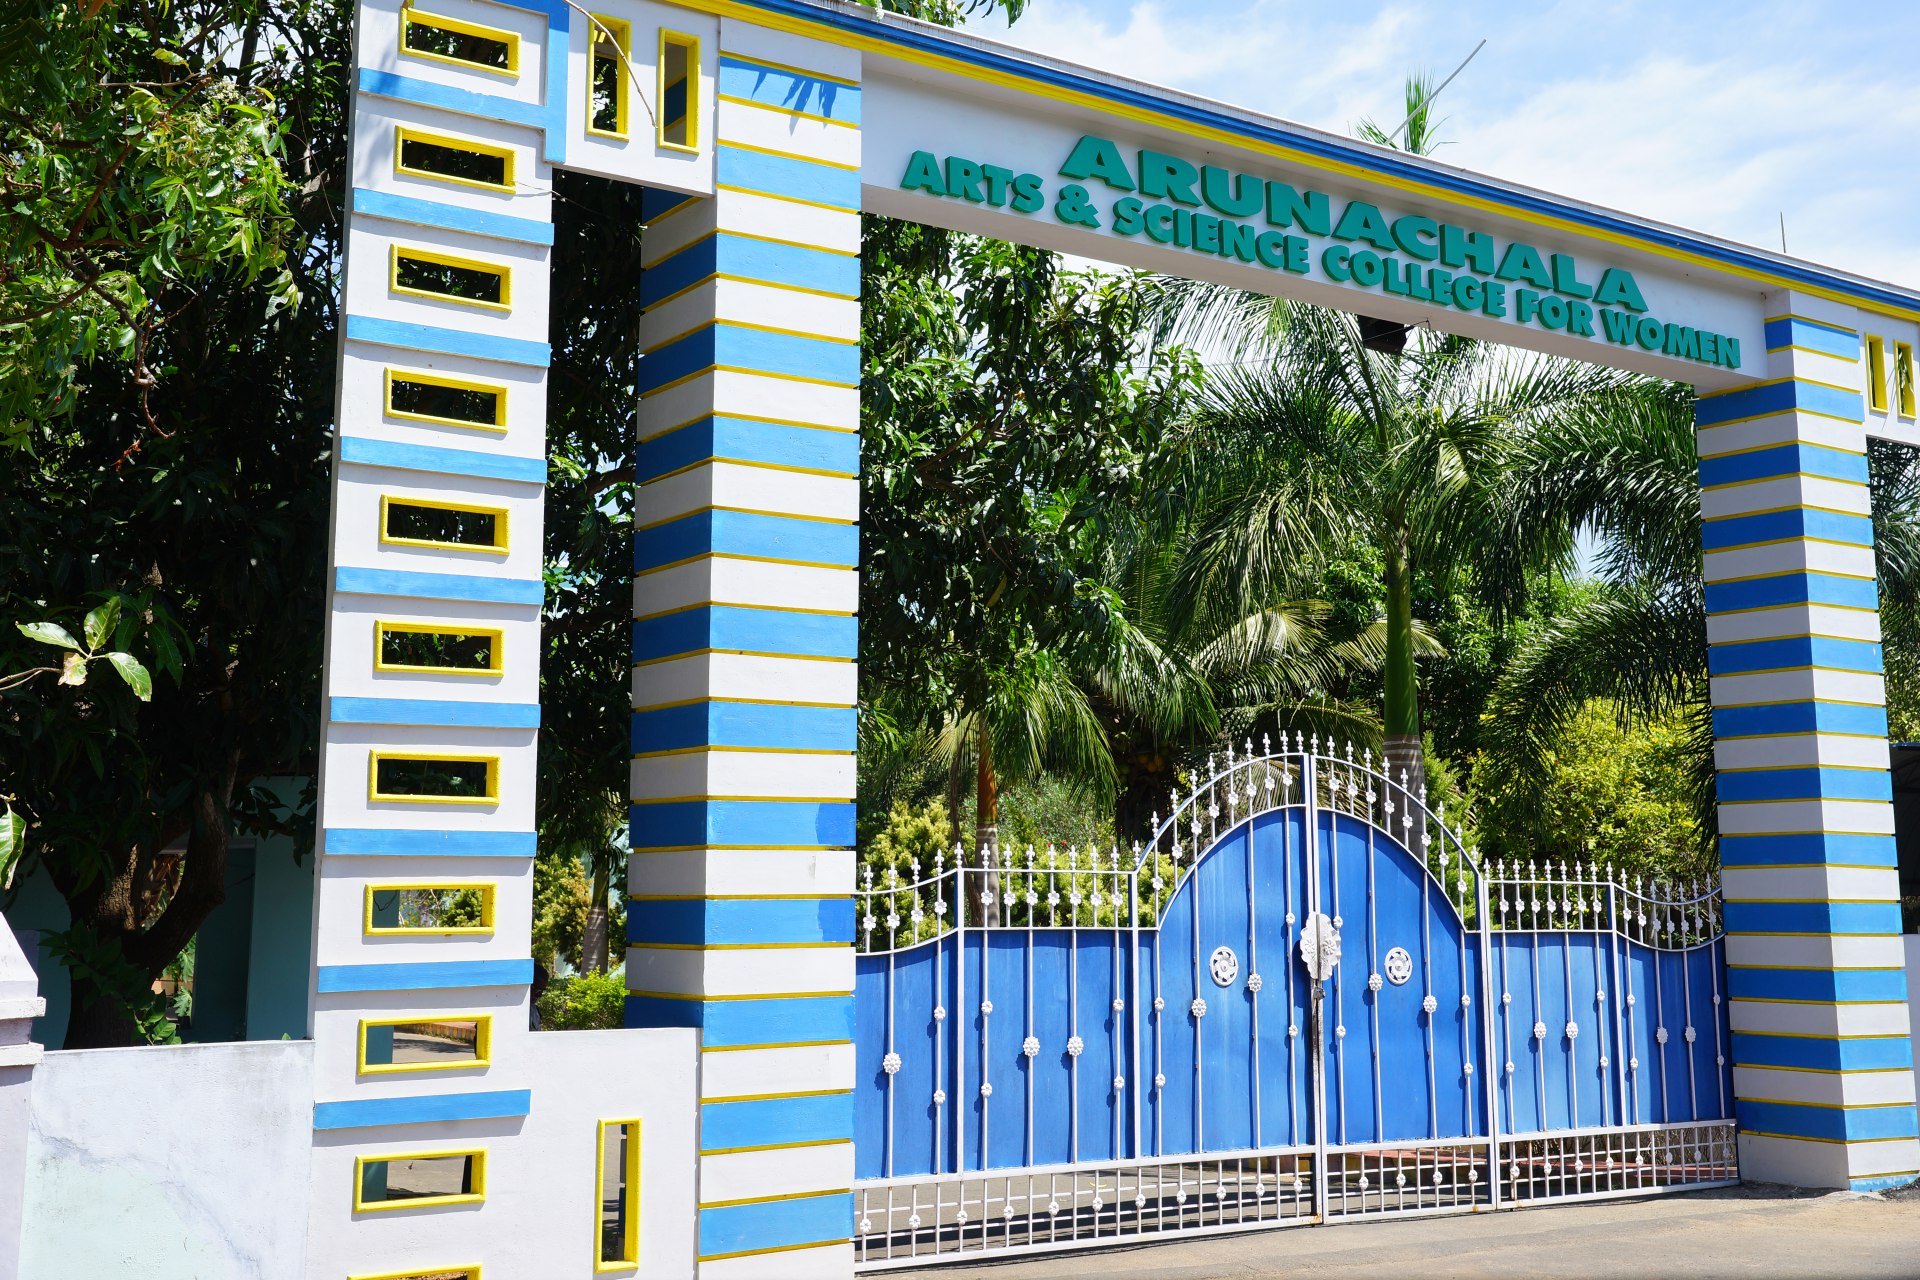 Arunachal Arts College Entrance